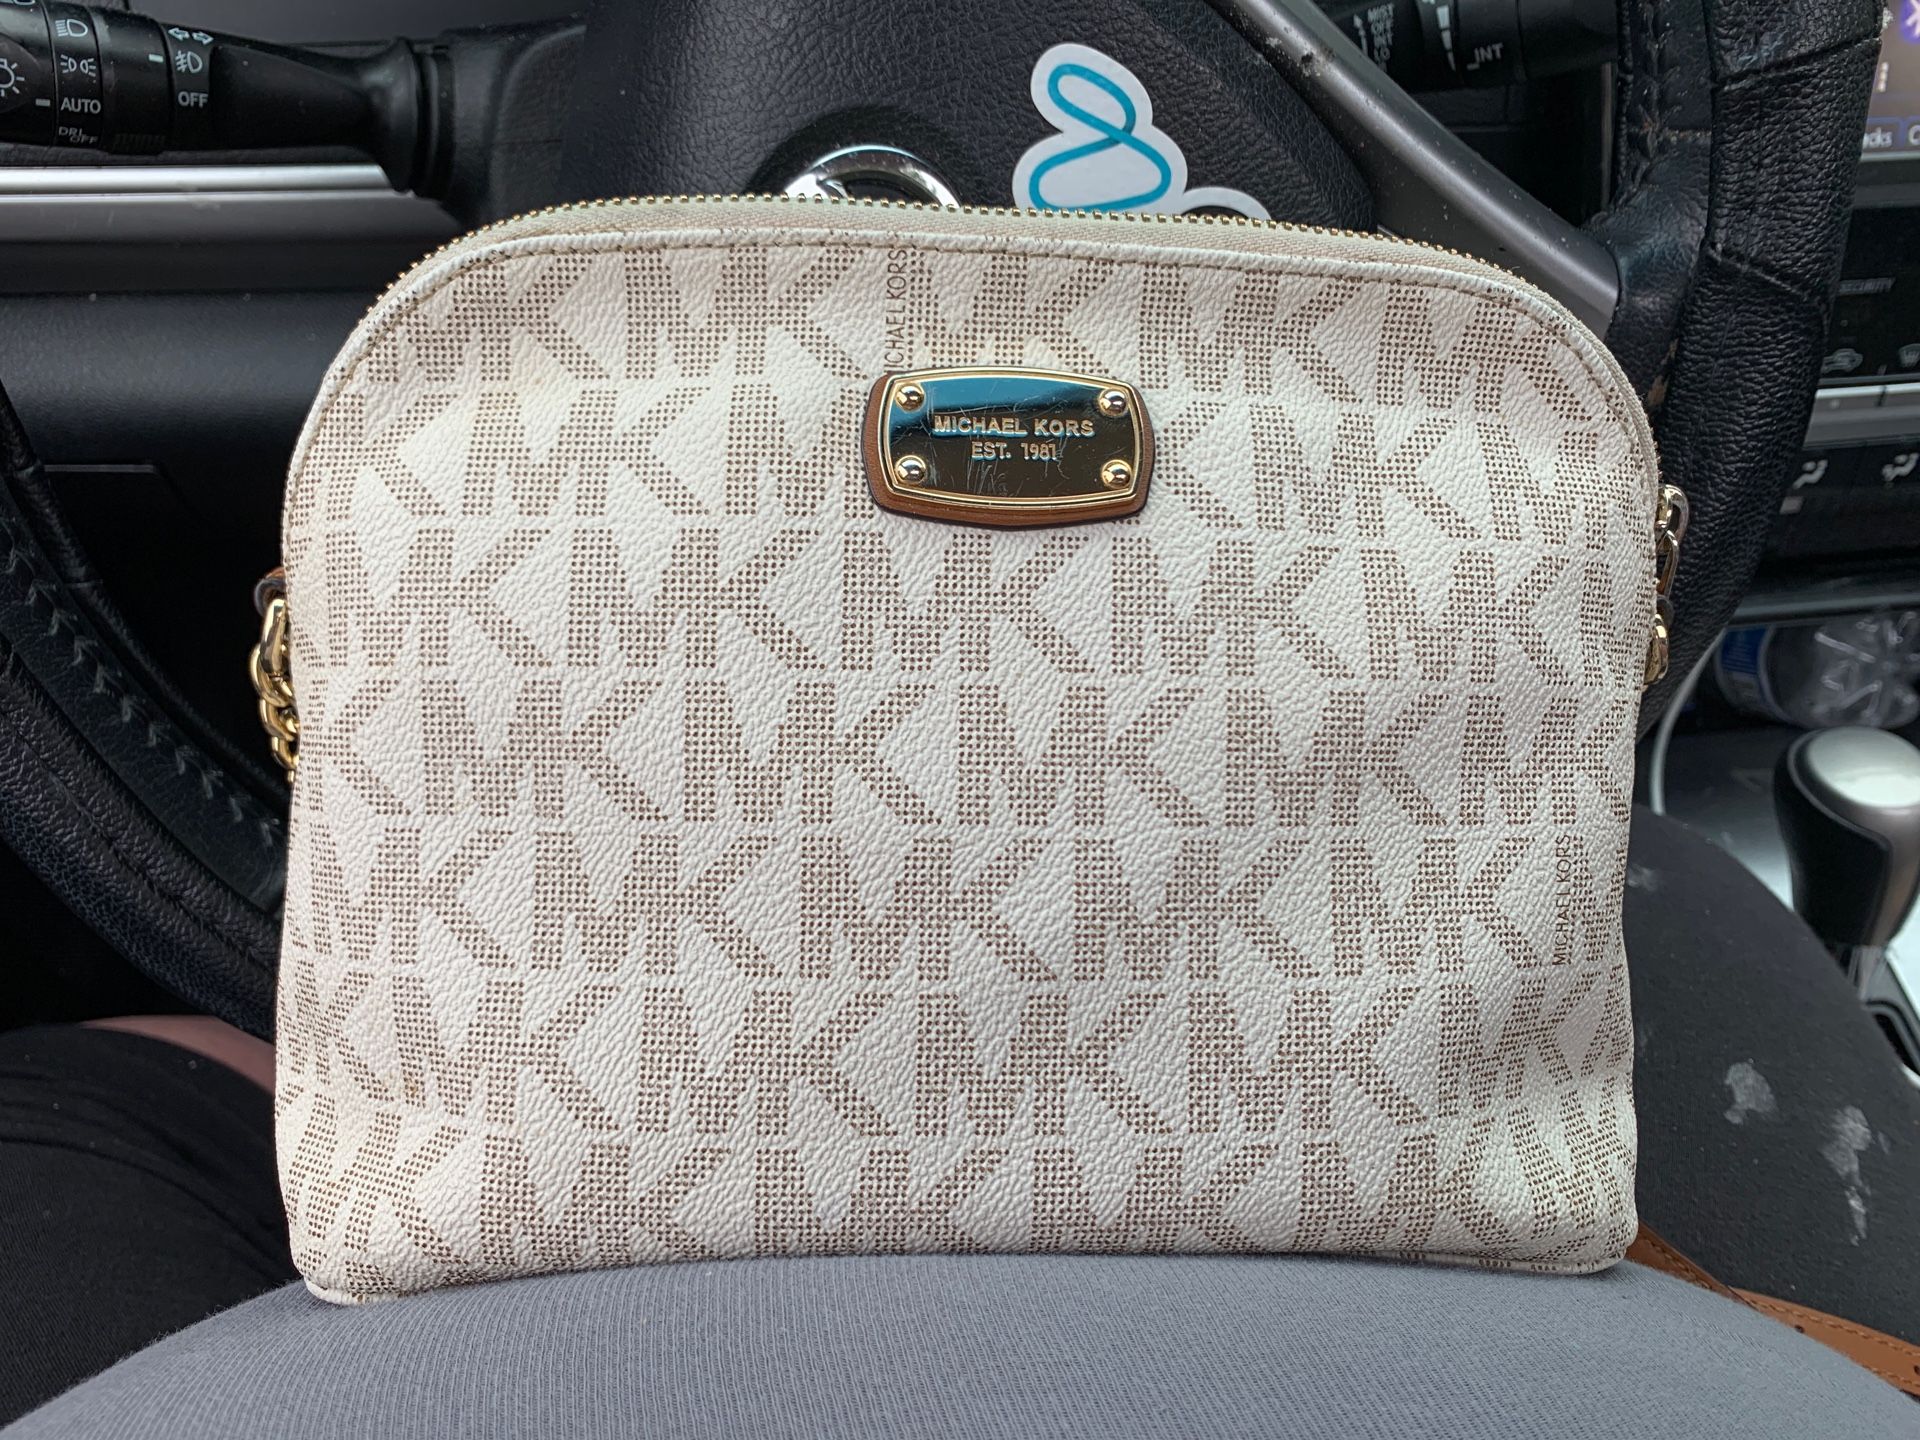 Genuine MK purse